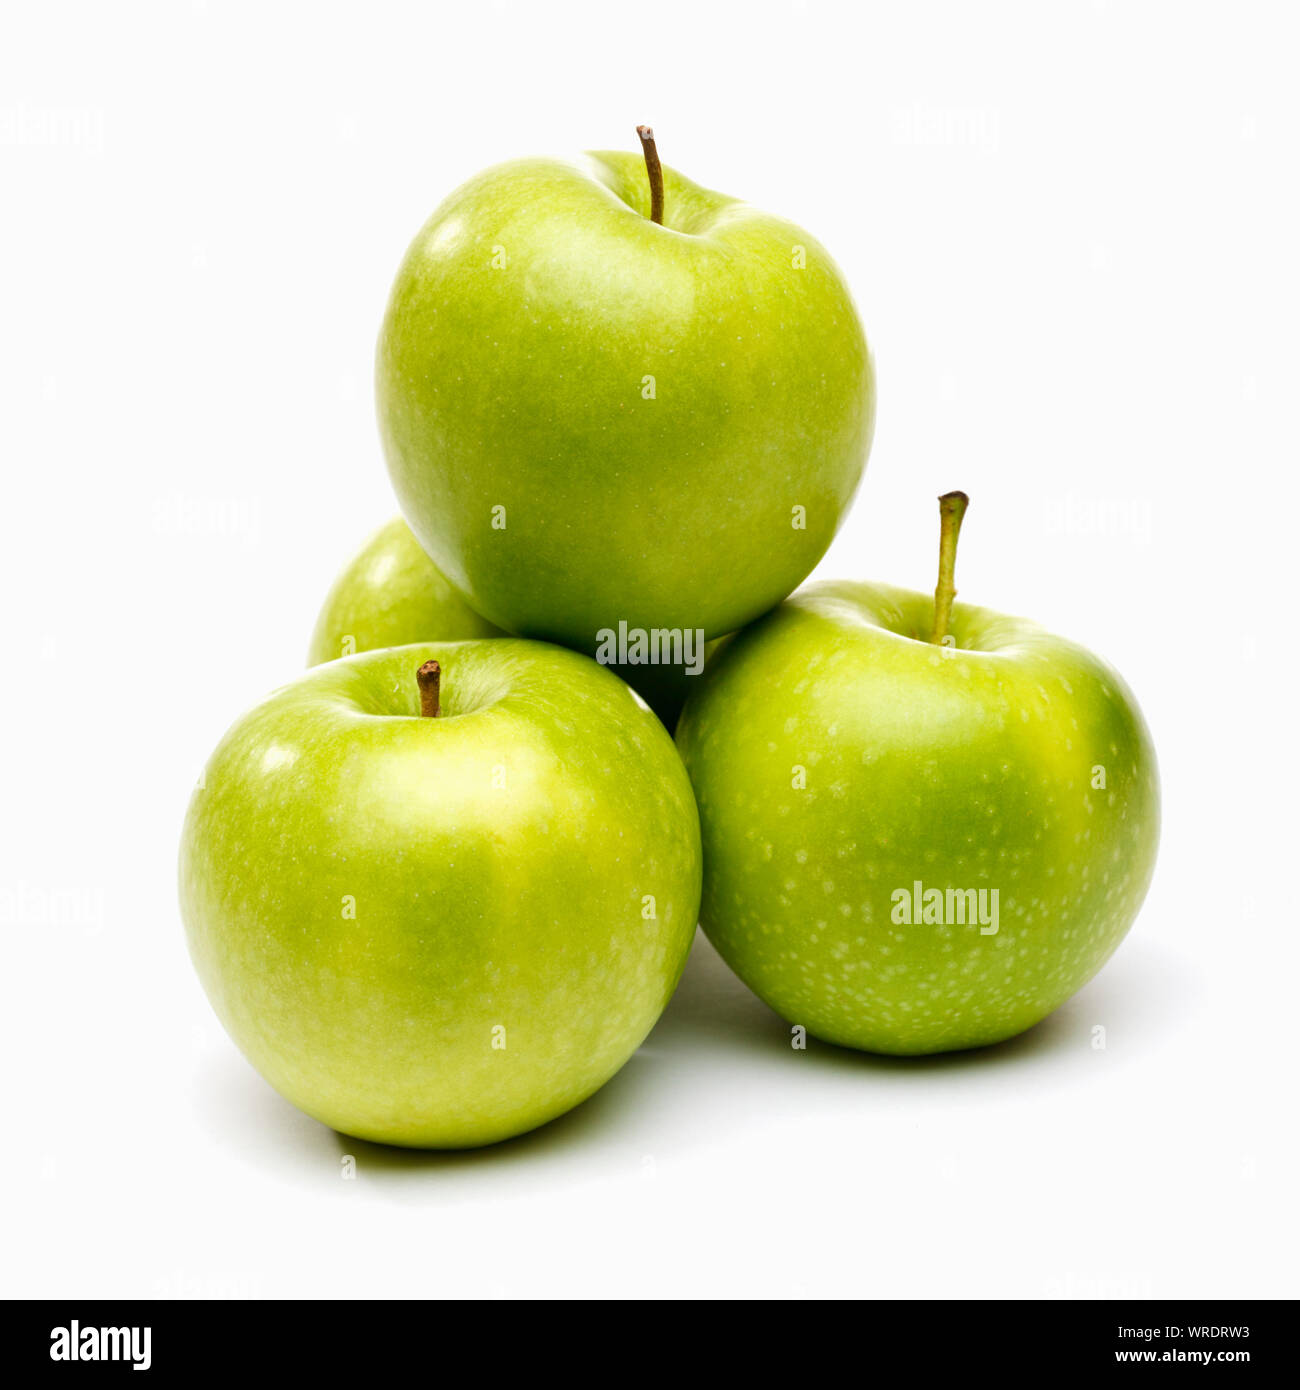 Apples, four green apples on white background Stock Photo